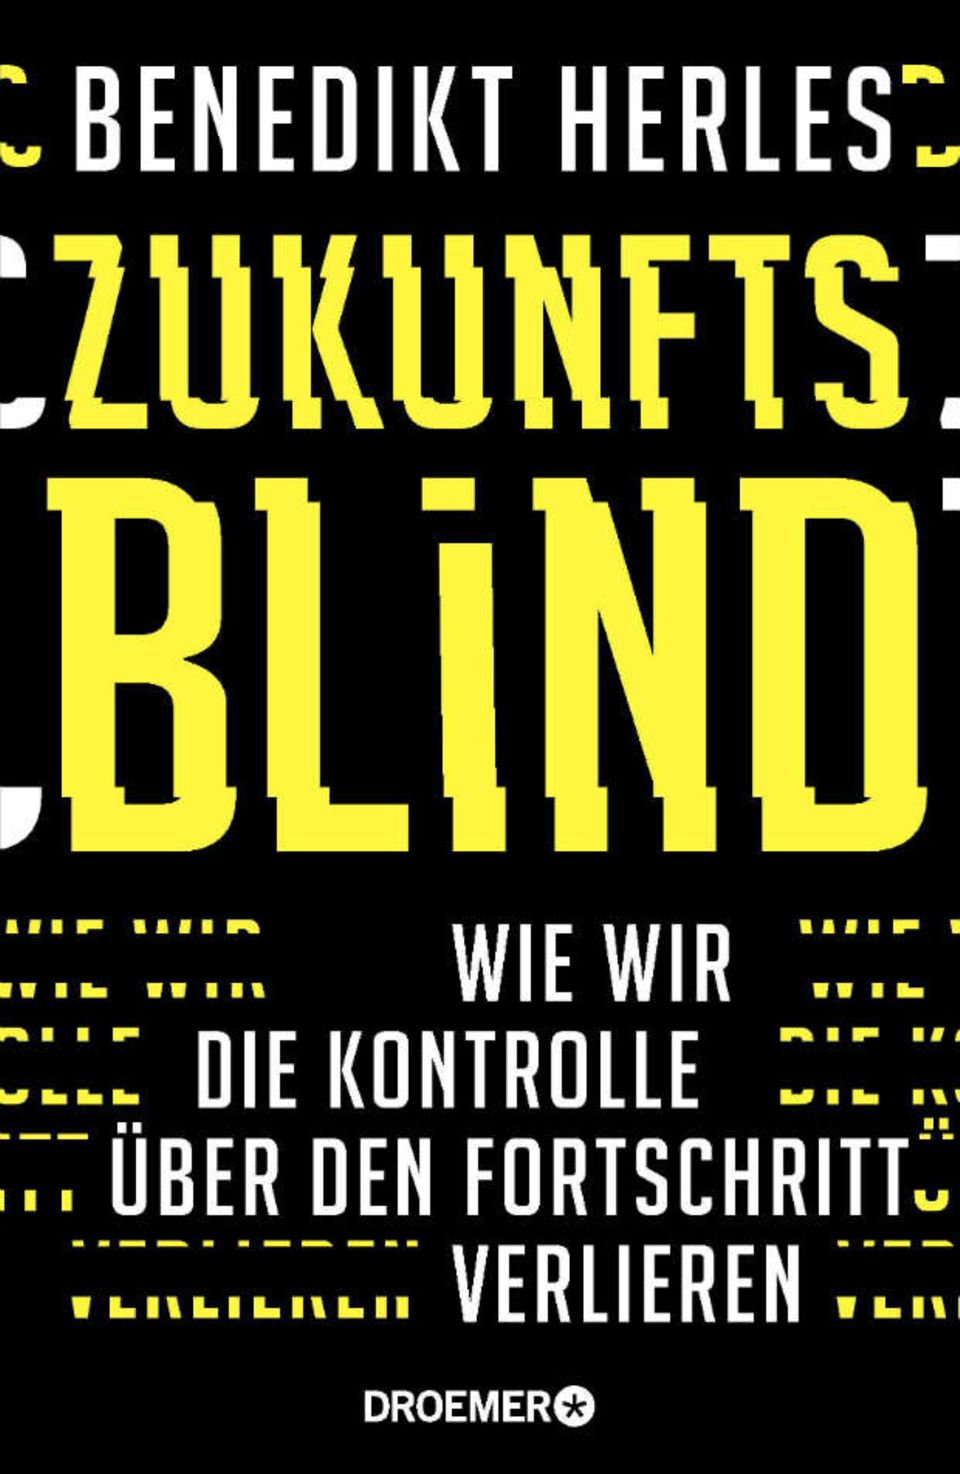 Benedikt Herles Buch "Zukunftsblick" ist im Droemer Verlag erschienen